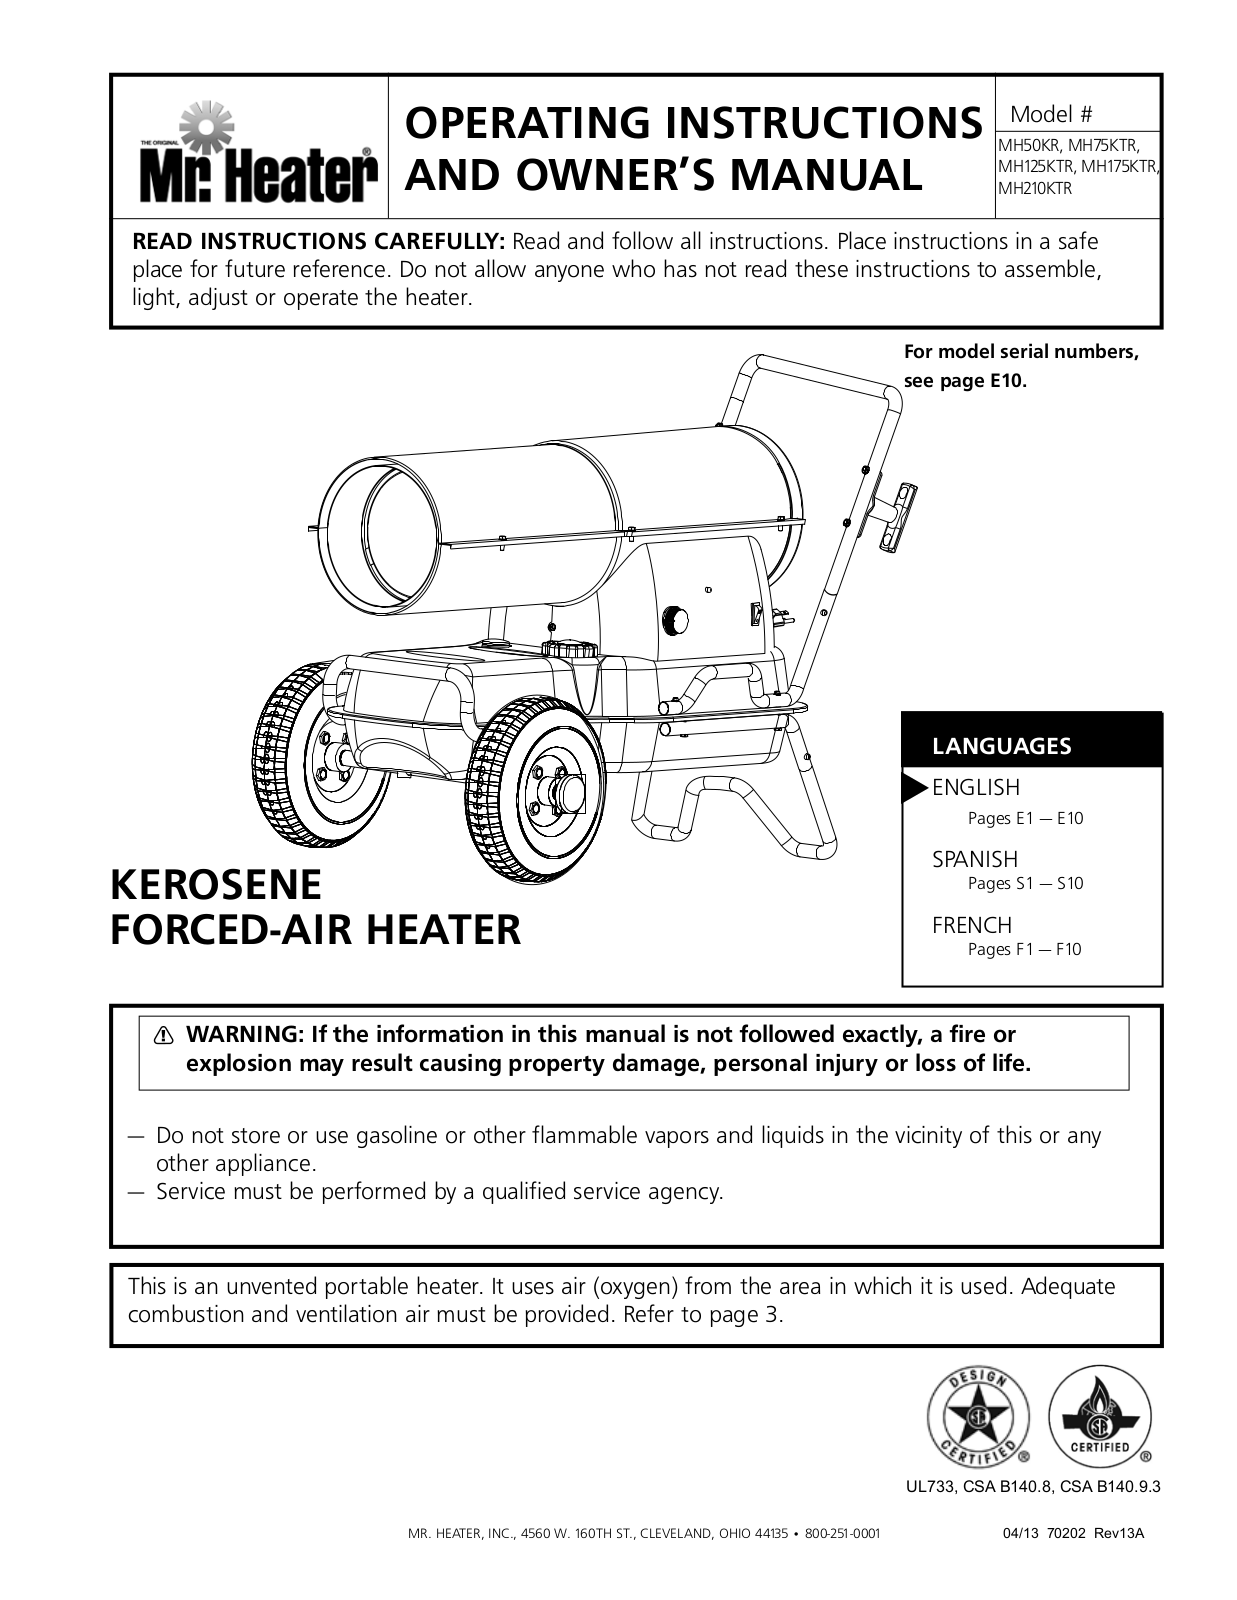 Mr. Heater MH75KTR User Manual